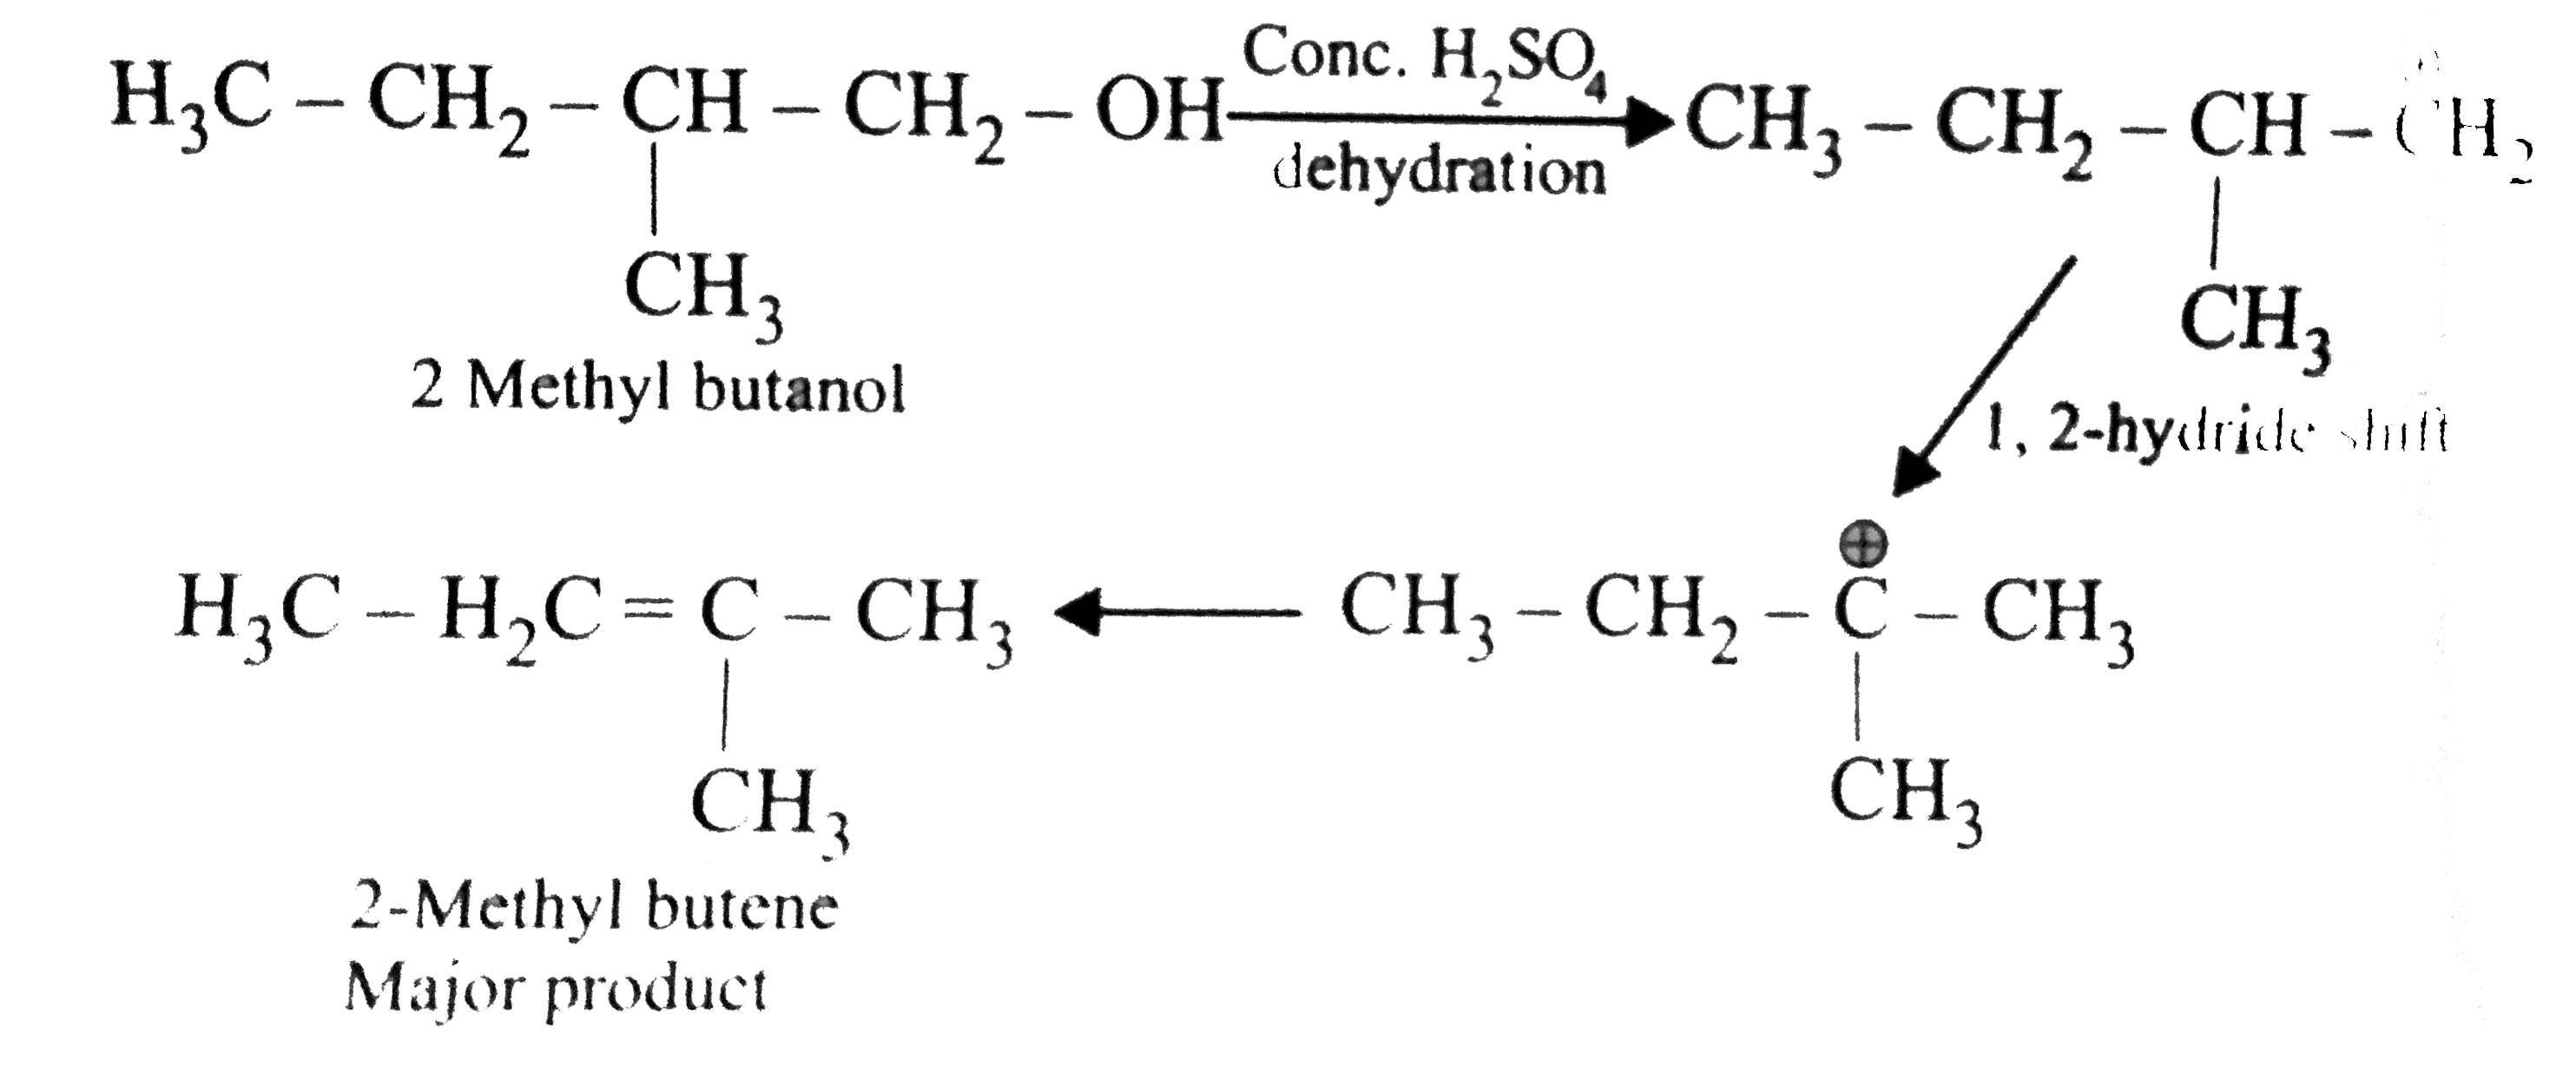 dehydration of 2 butanol